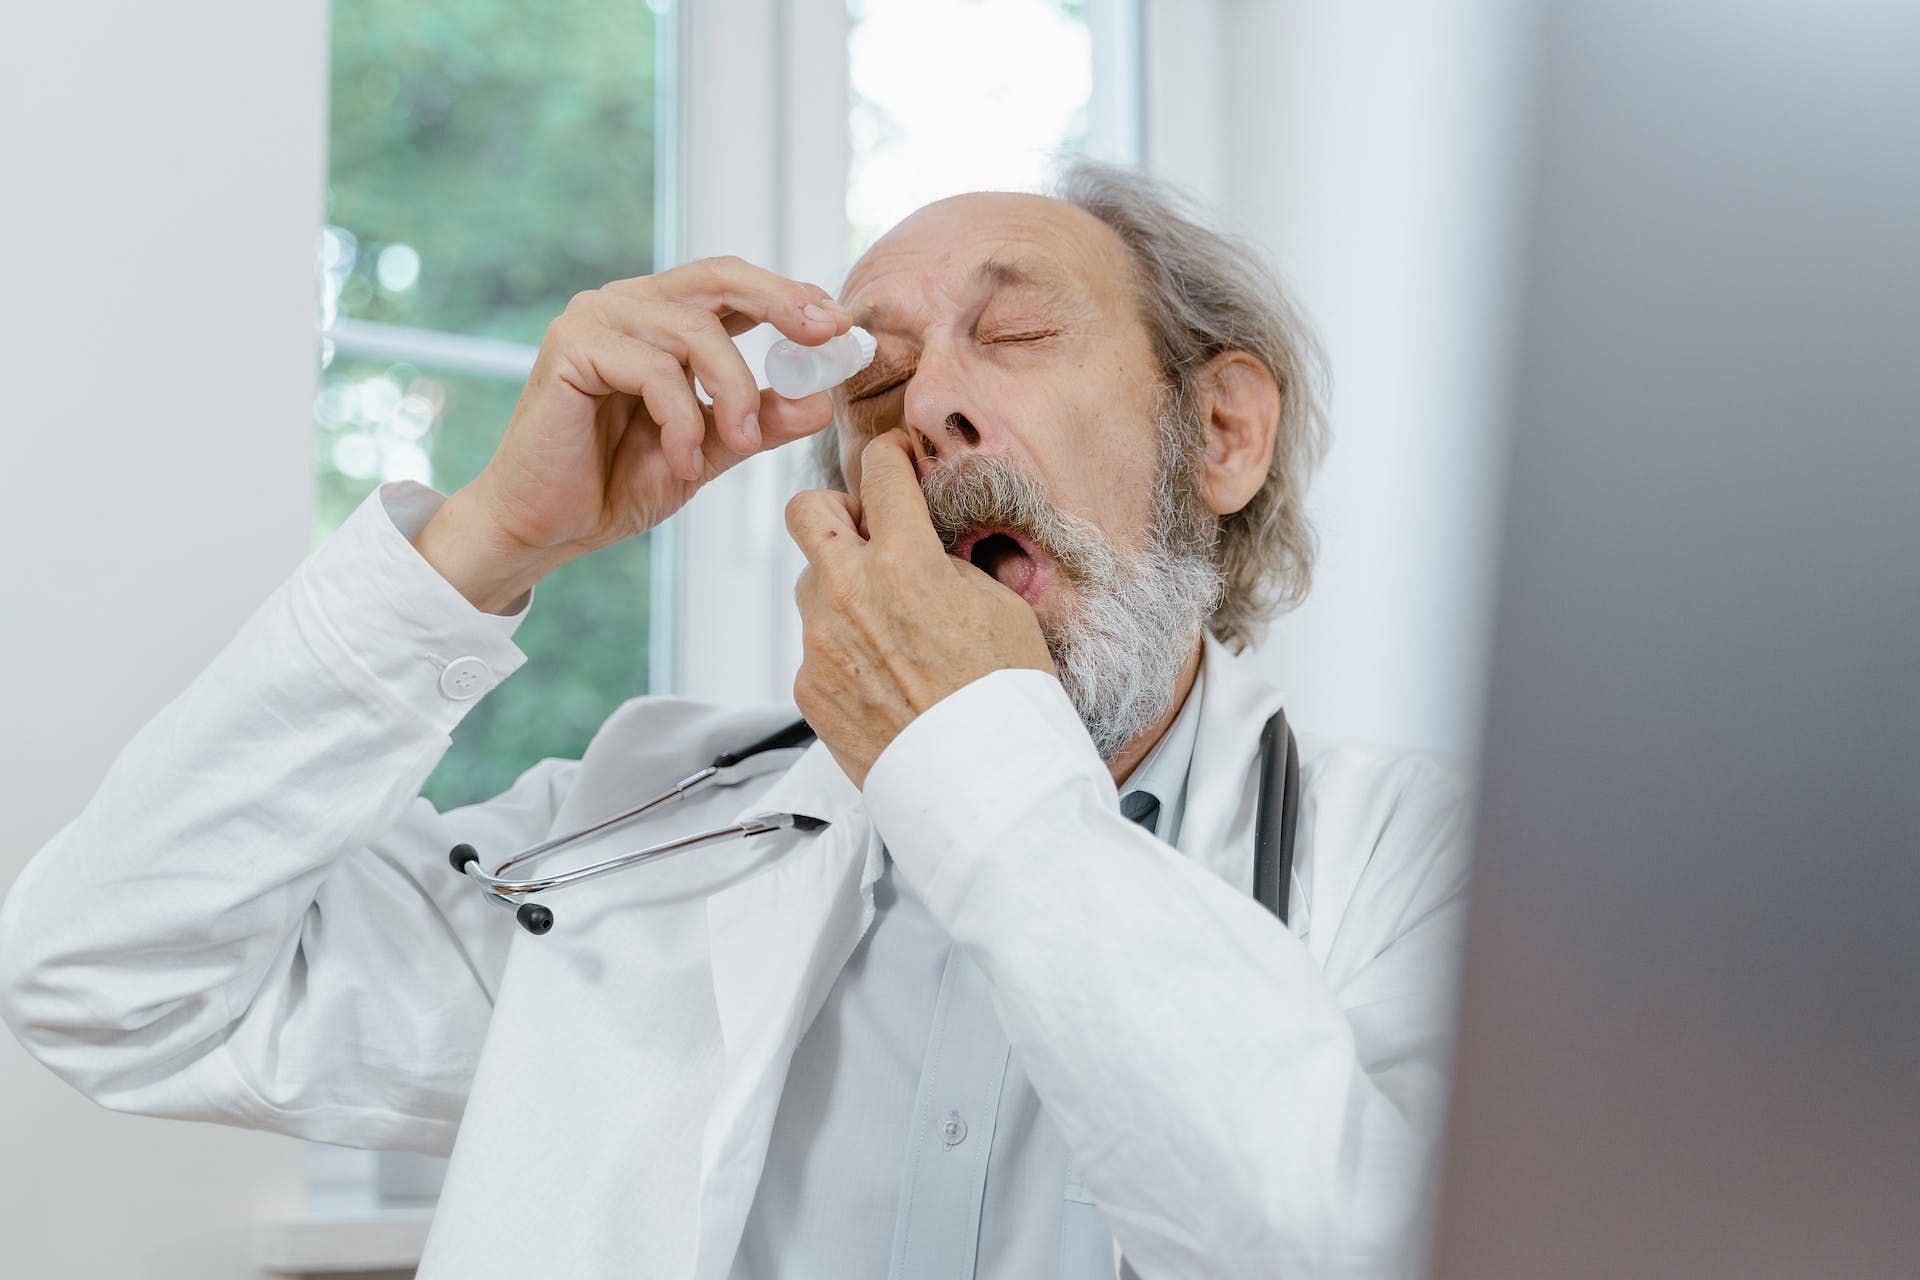 Using nasal spray twice a day is the best option (Image via Pexels/Tima Miroshnichenko)